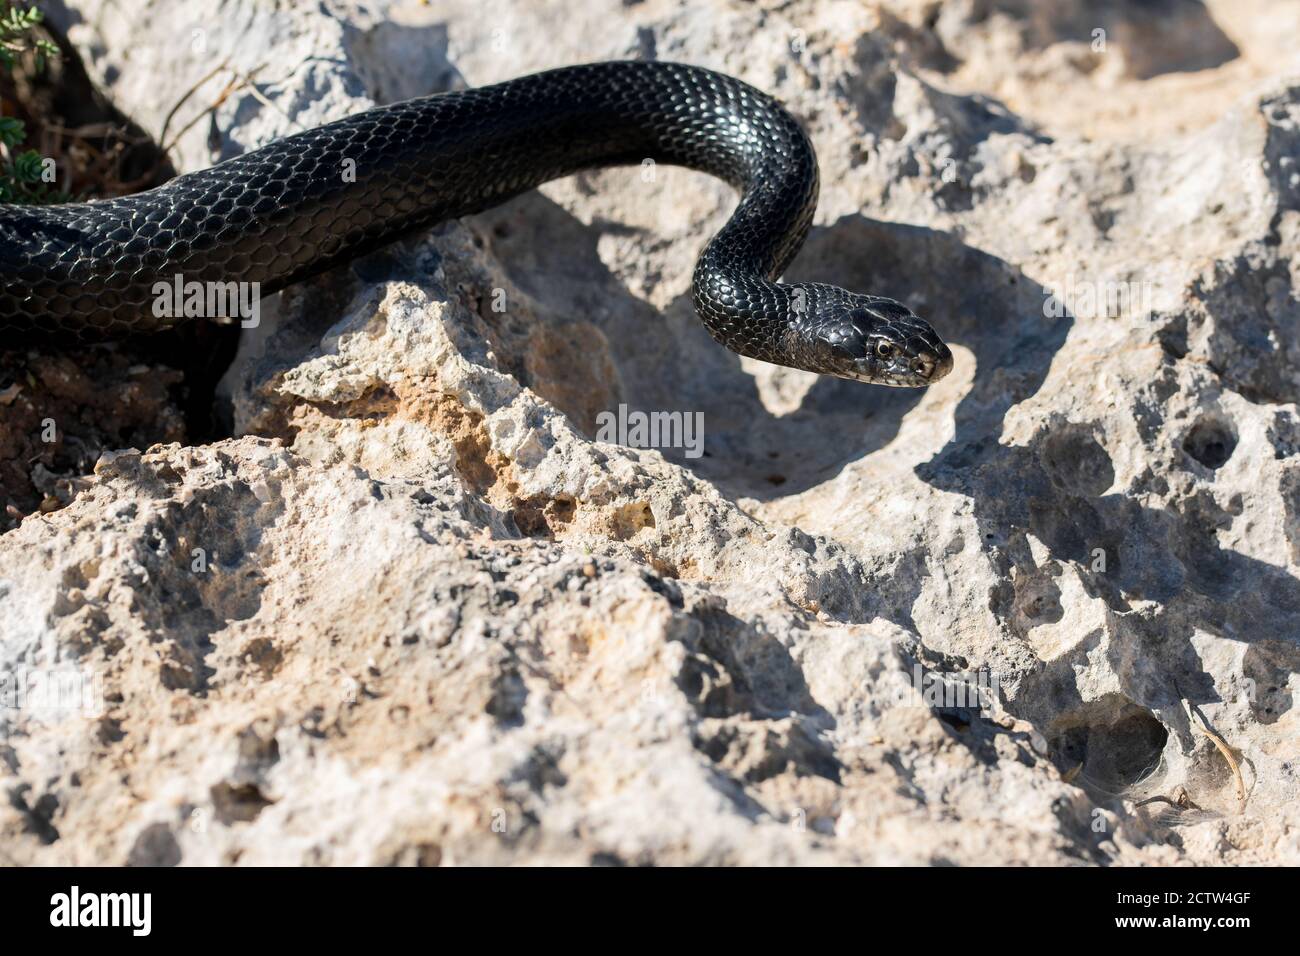 Black western whip snake, Hierophis viridiflavus, slithering on rocks and  dry vegetation in Malta Stock Photo - Alamy